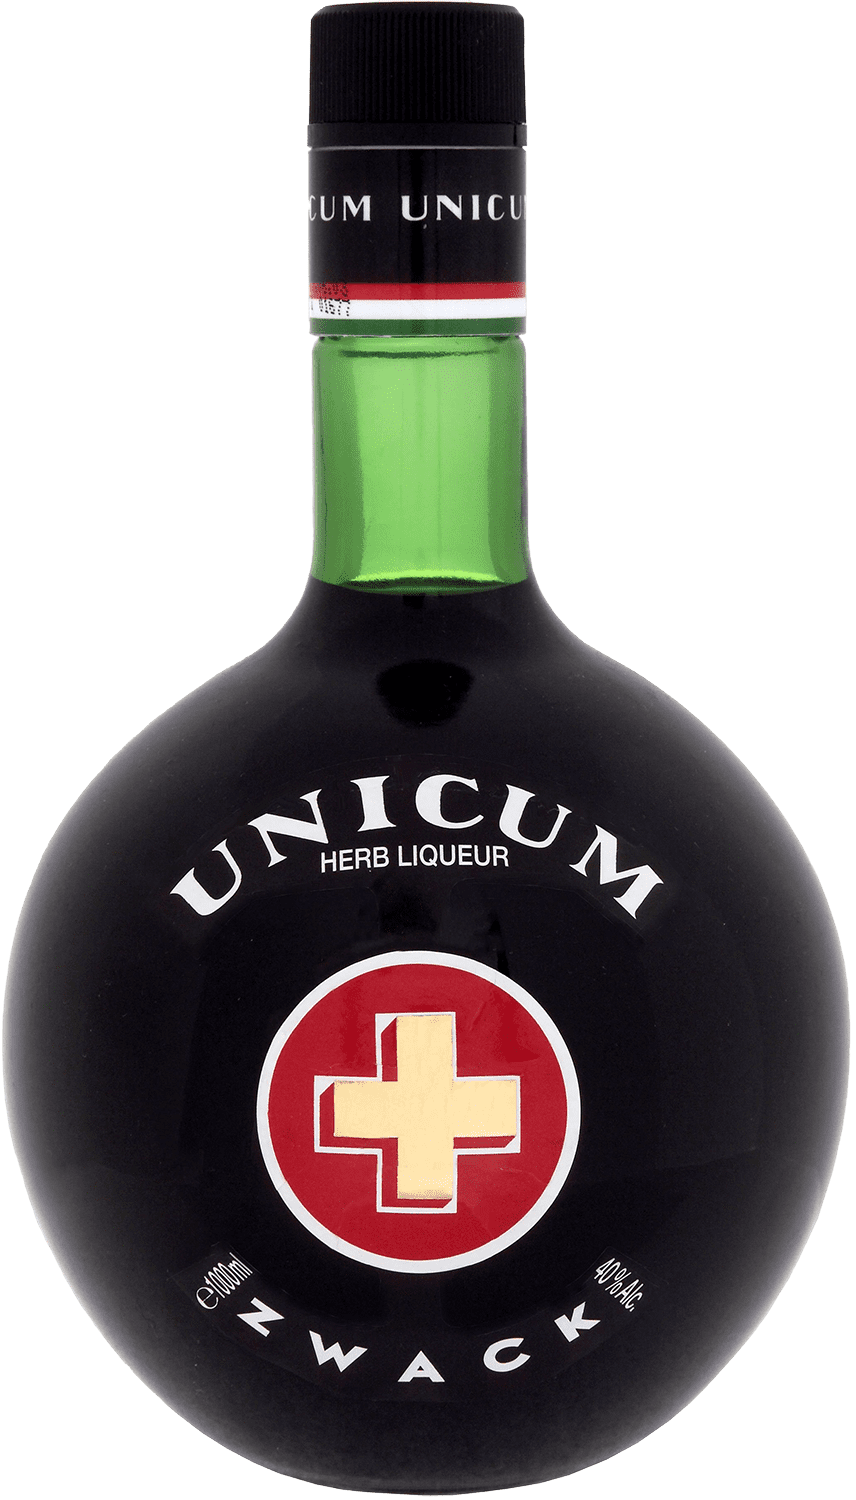 Zwack Unicum 59310